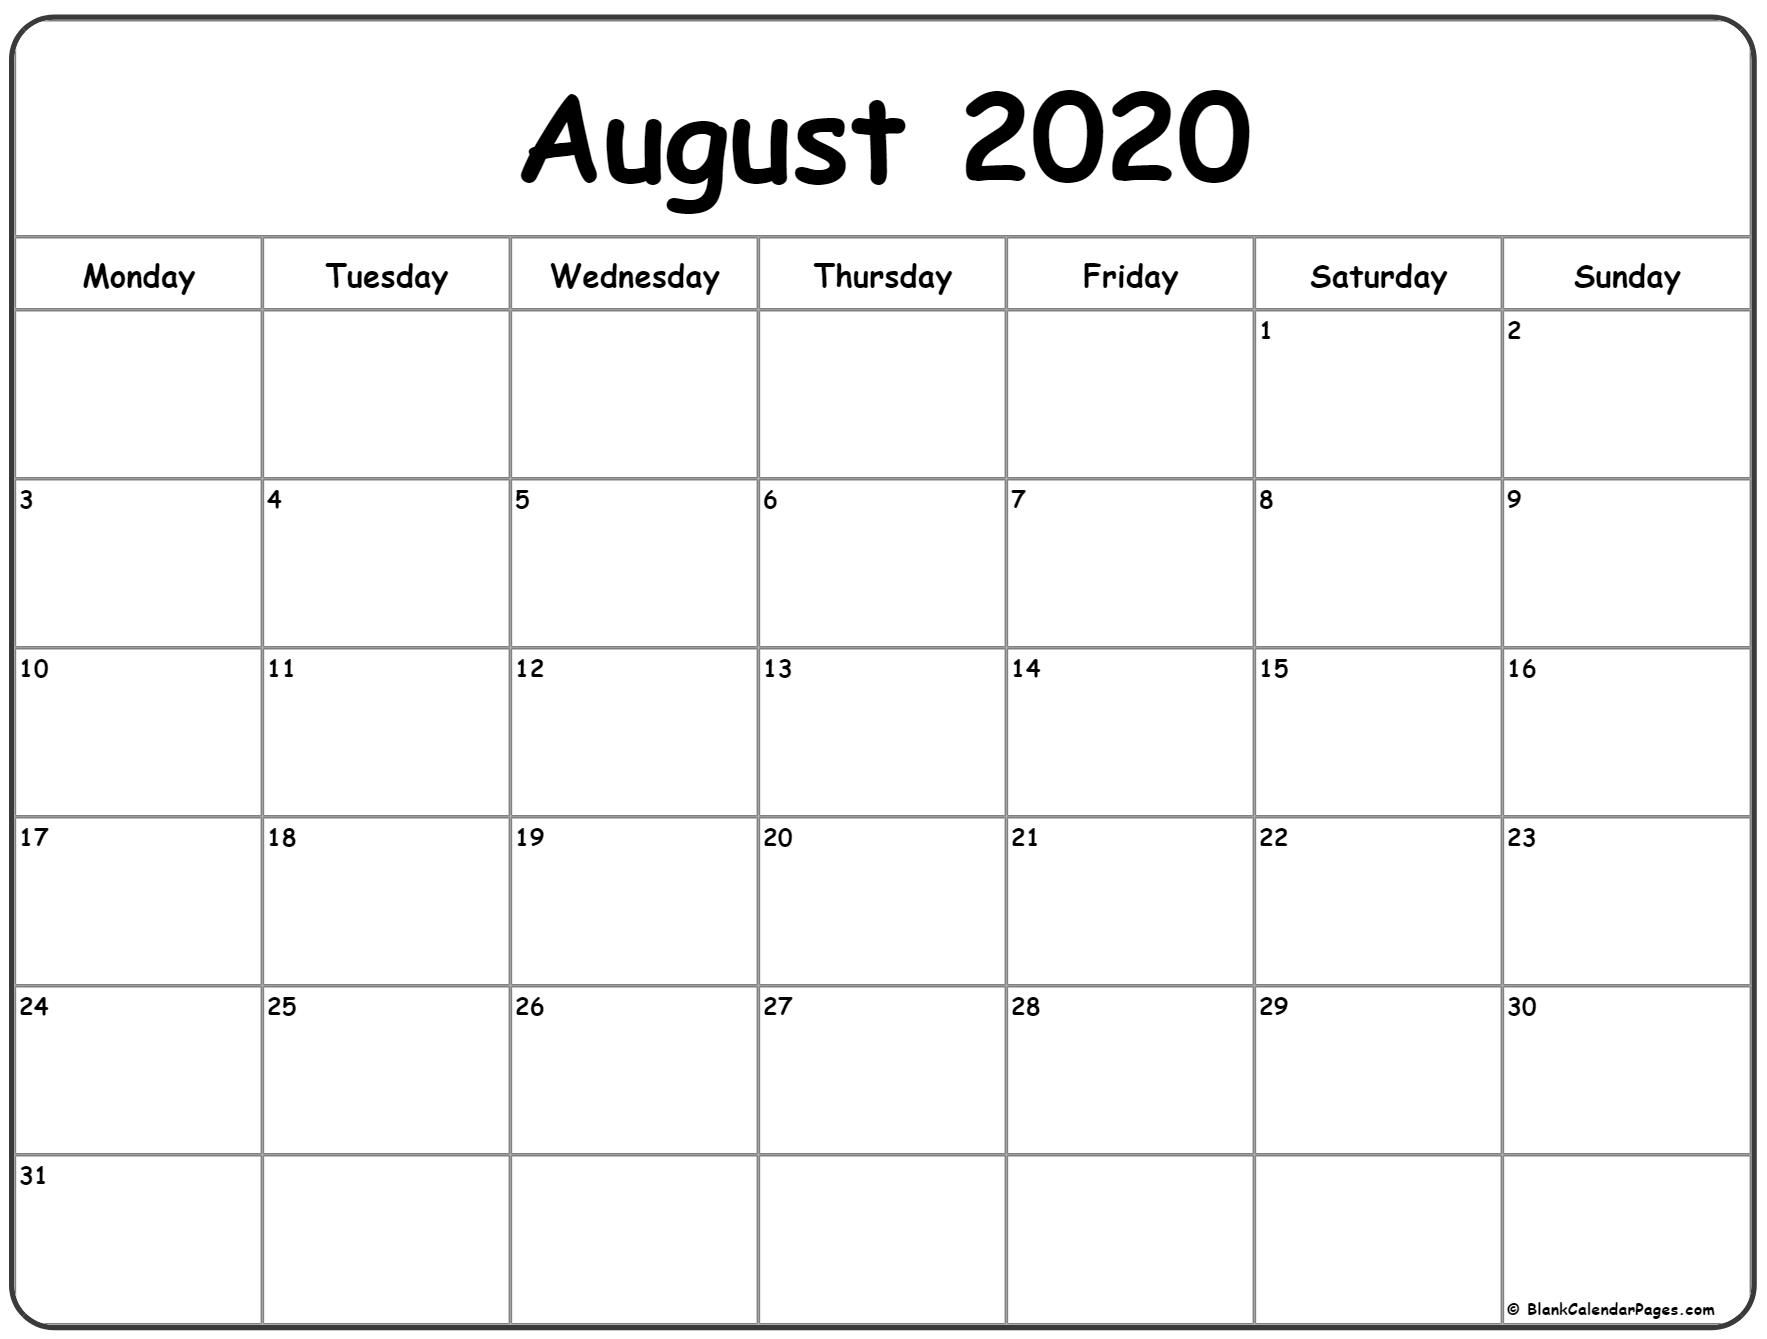 August 2020 Monday Calendar | Monday To Sunday